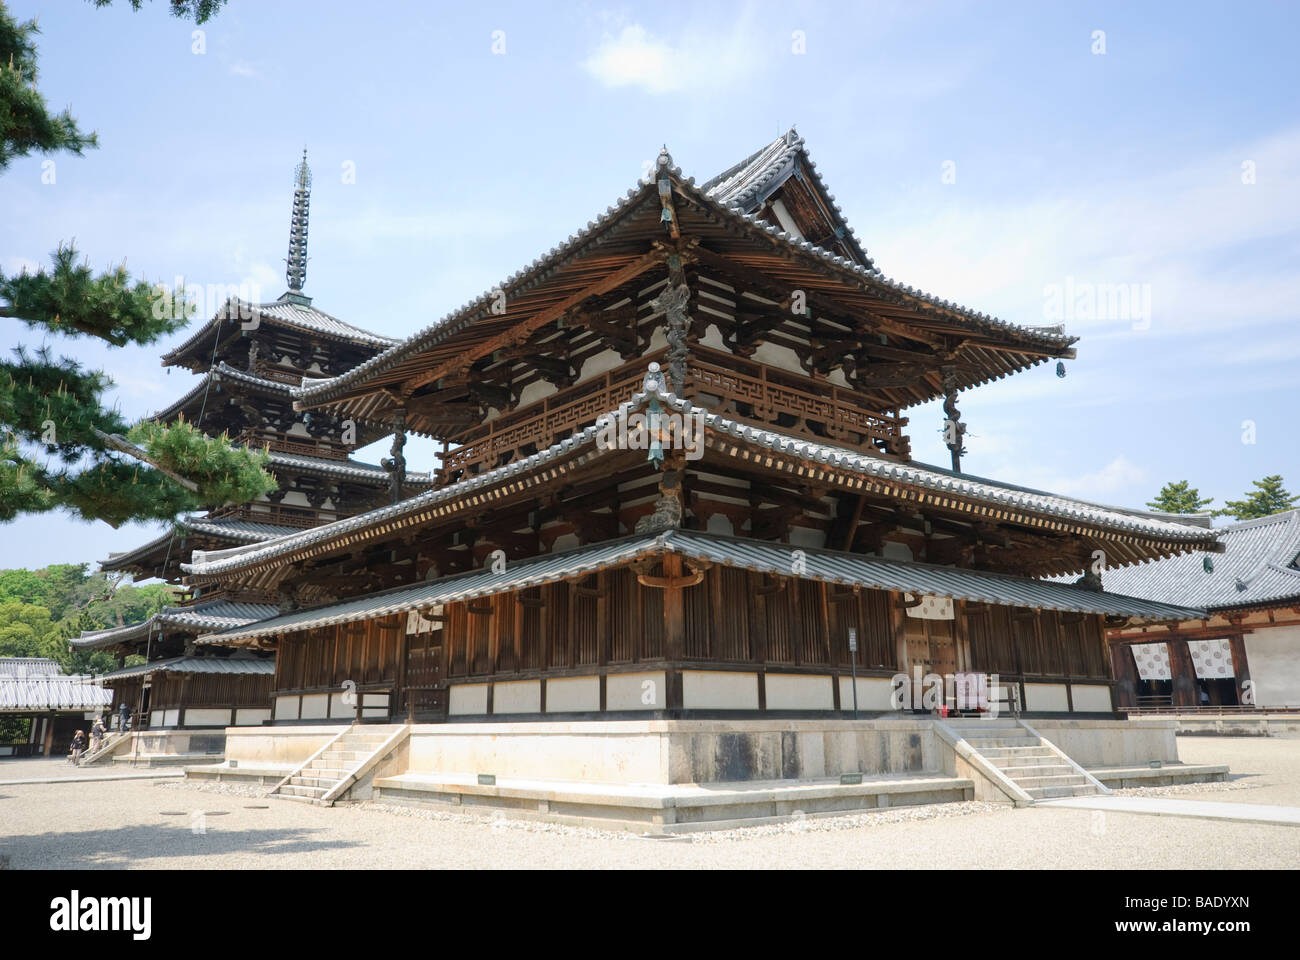 The Kondo (main hall) of the Sai-in part of Horyu-ji, with the 5 storey pagoda behind. Nara Prefecture, Japan. Stock Photo